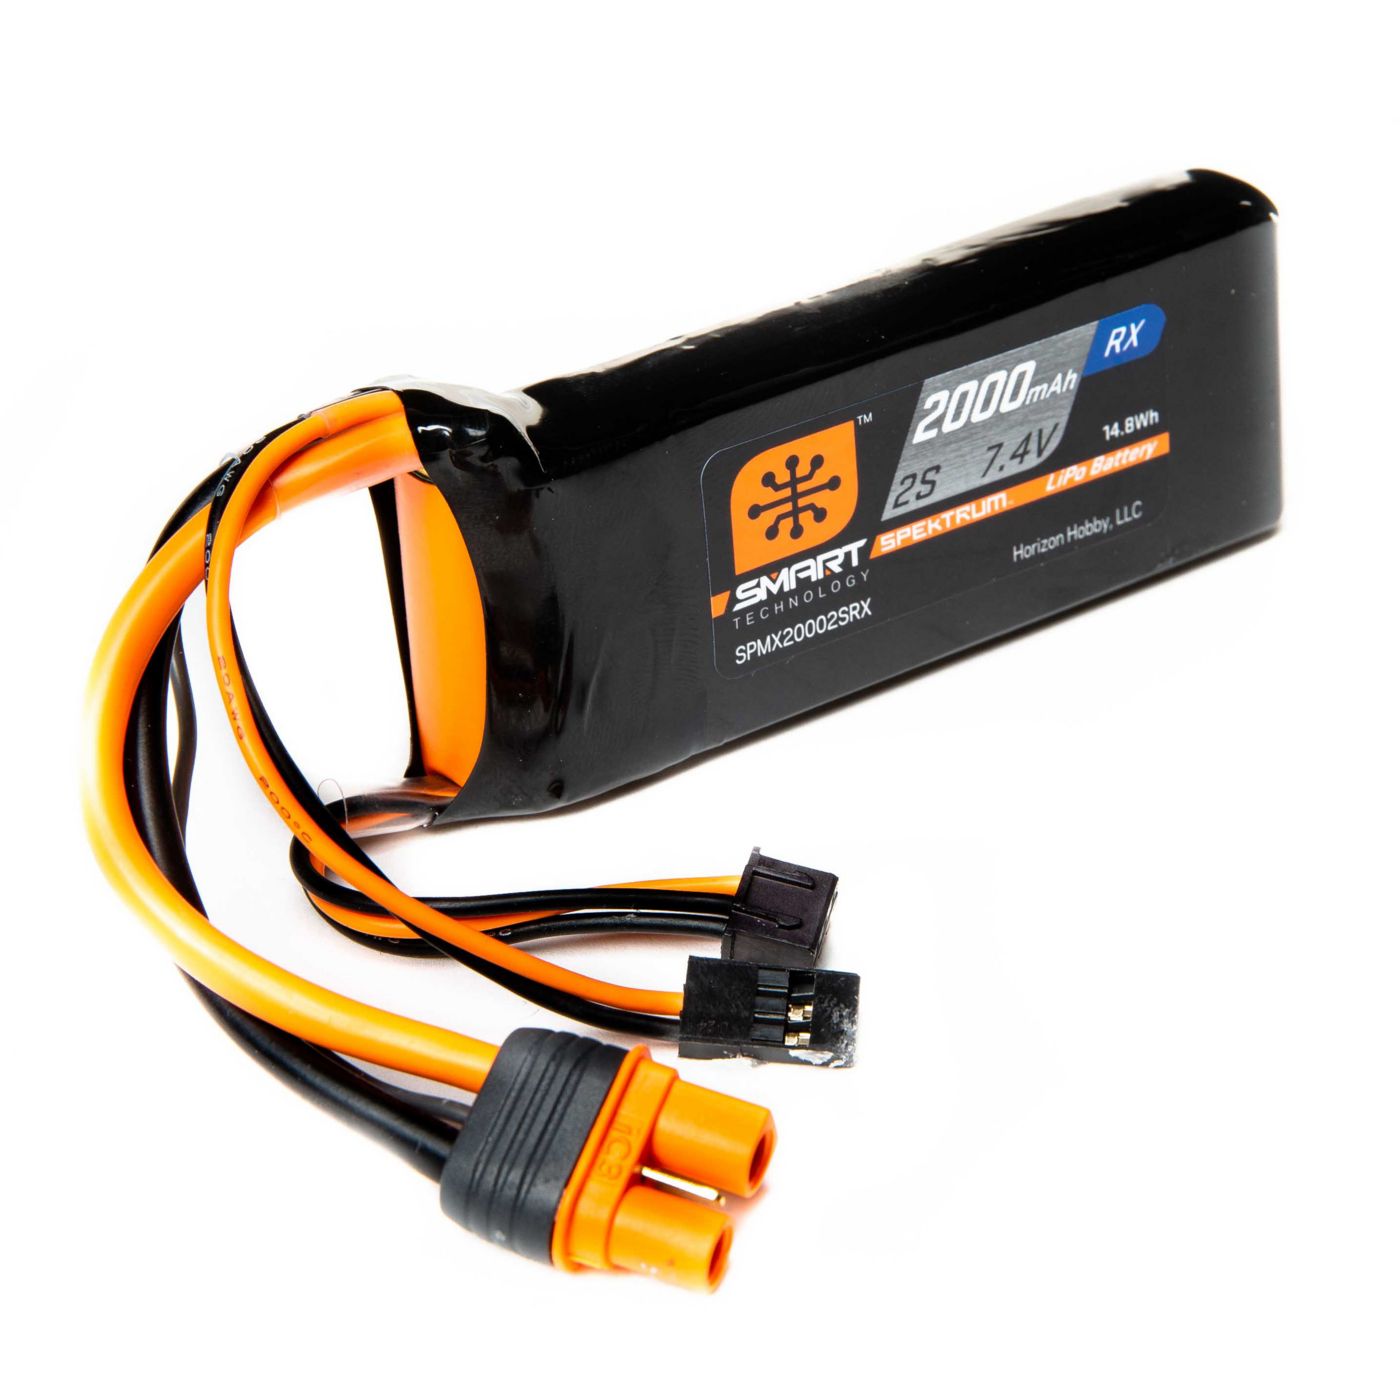 Spektrum 2000mAh 2S 7.4V Smart LiPo Receiver Battery IC3 SPMX20002SRX